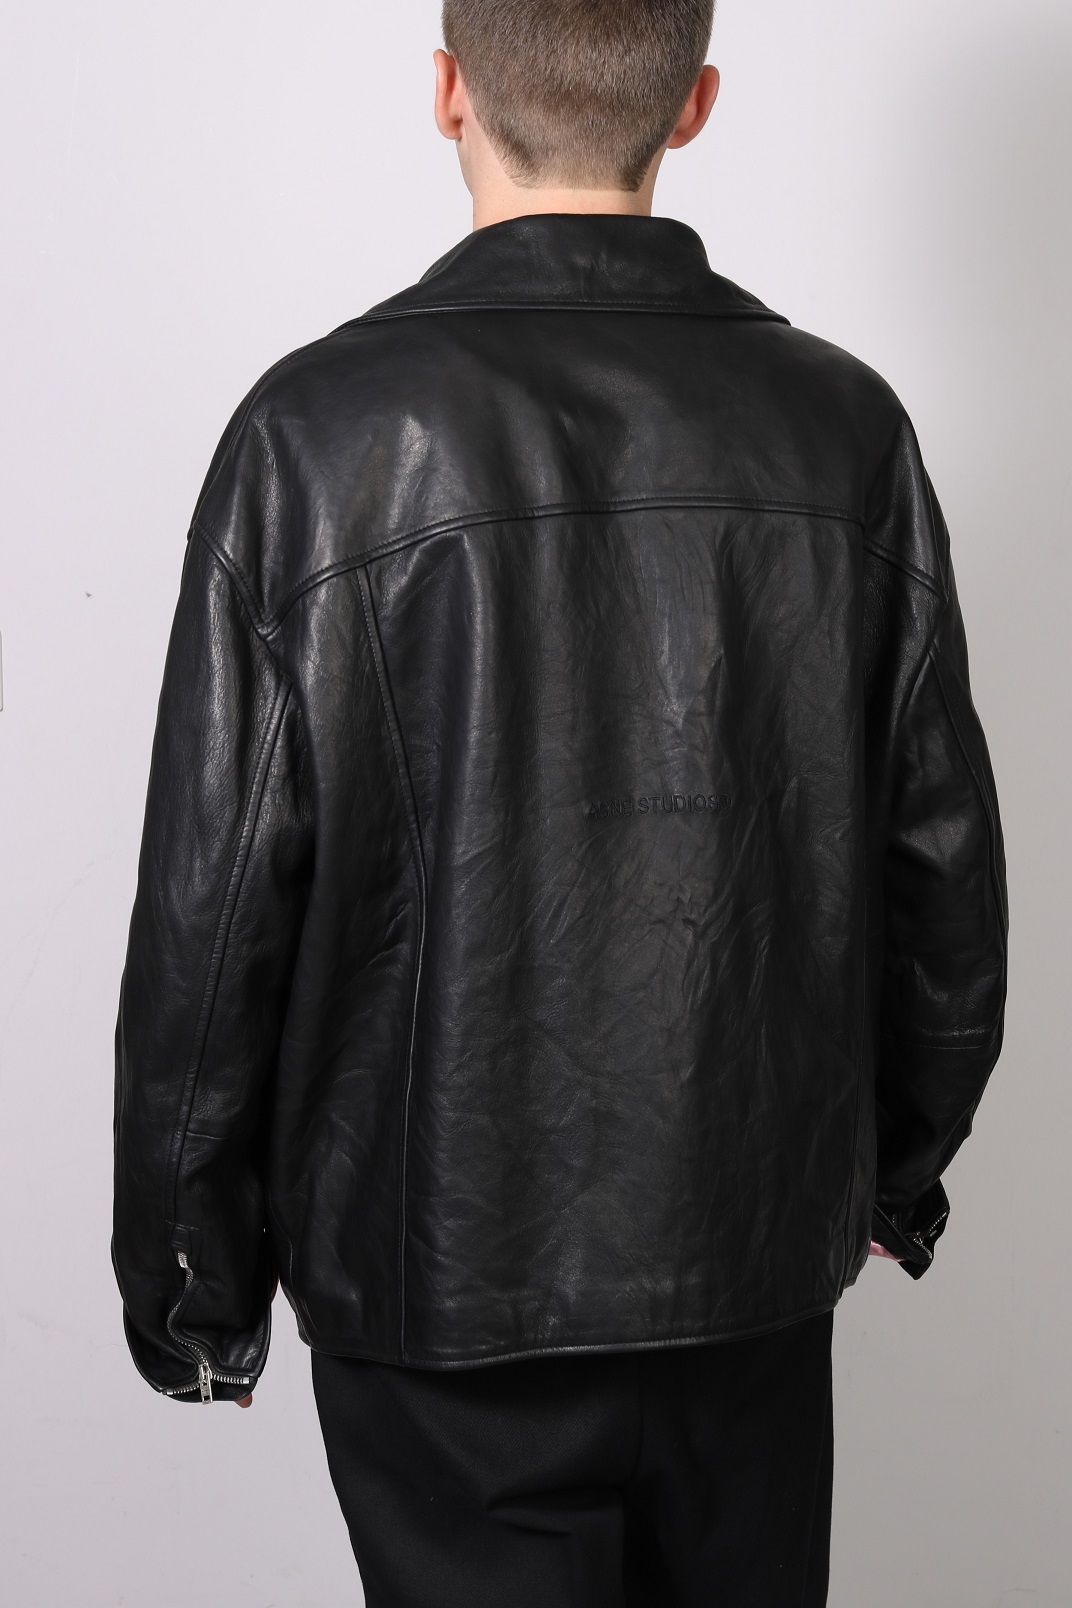 ACNE STUDIOS Vintage Leather Jacket in Black